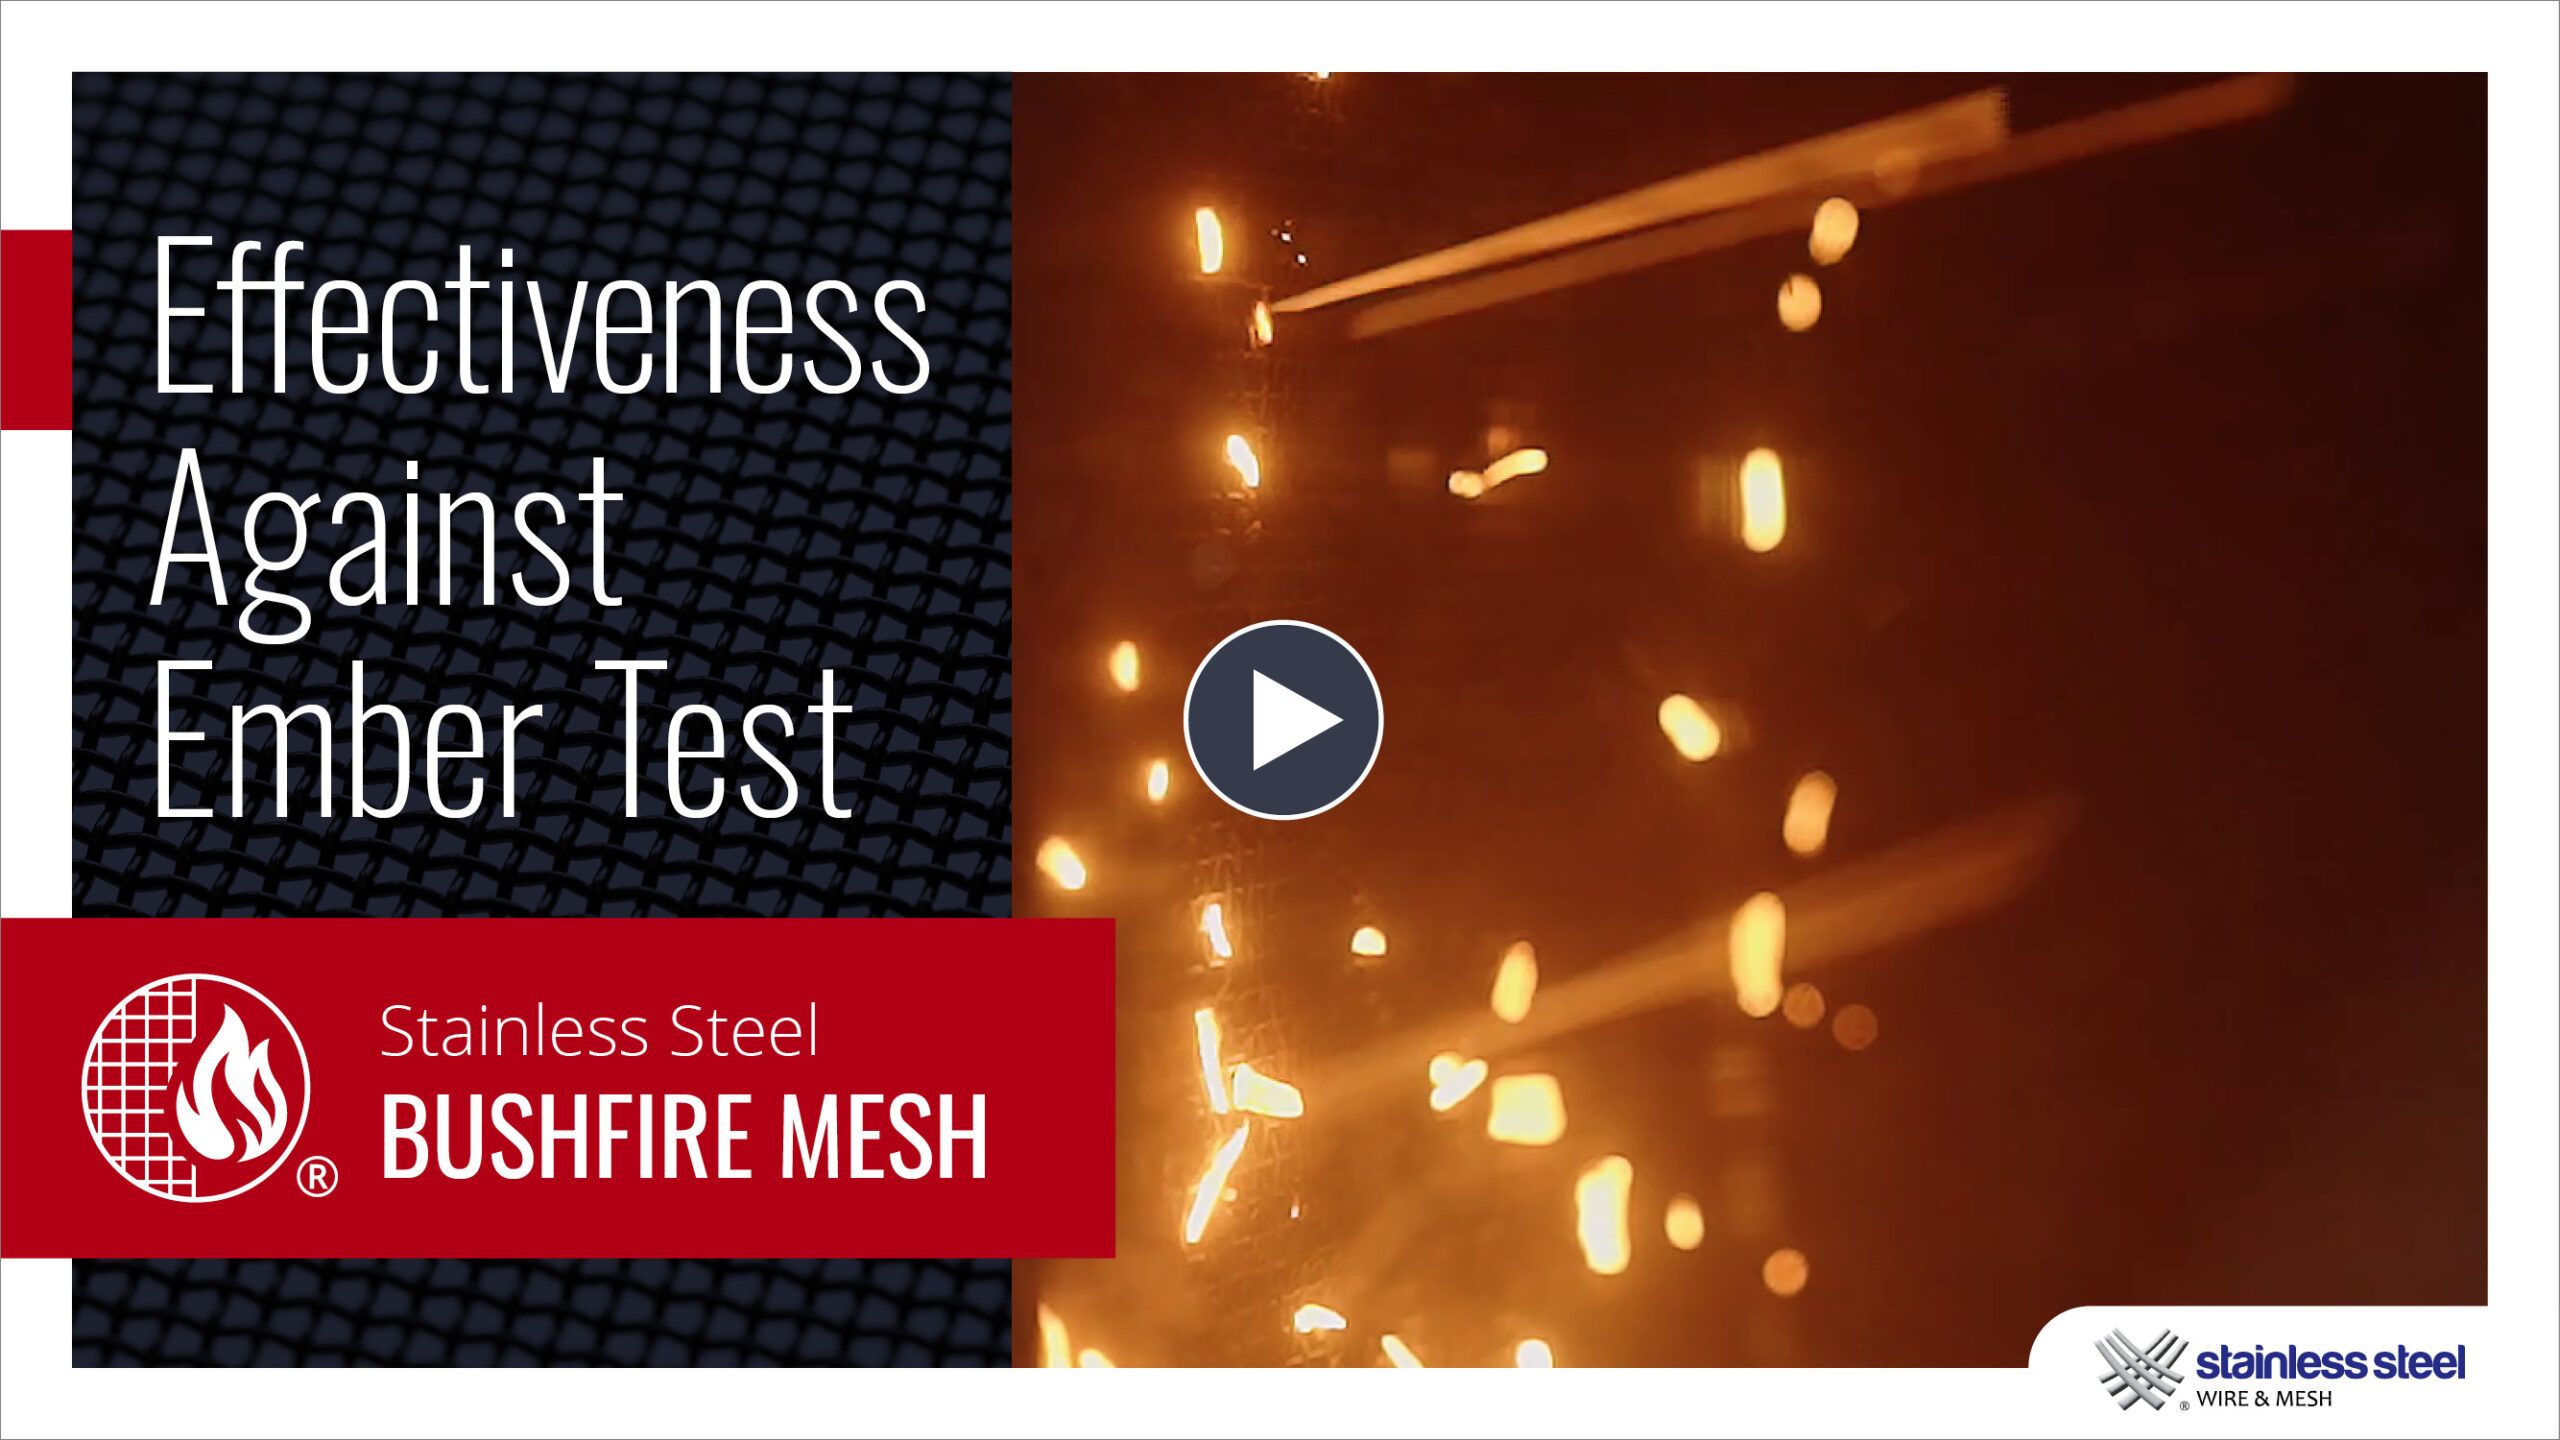 SSWM Bushfire Mesh Effectiveness Against Embers Test